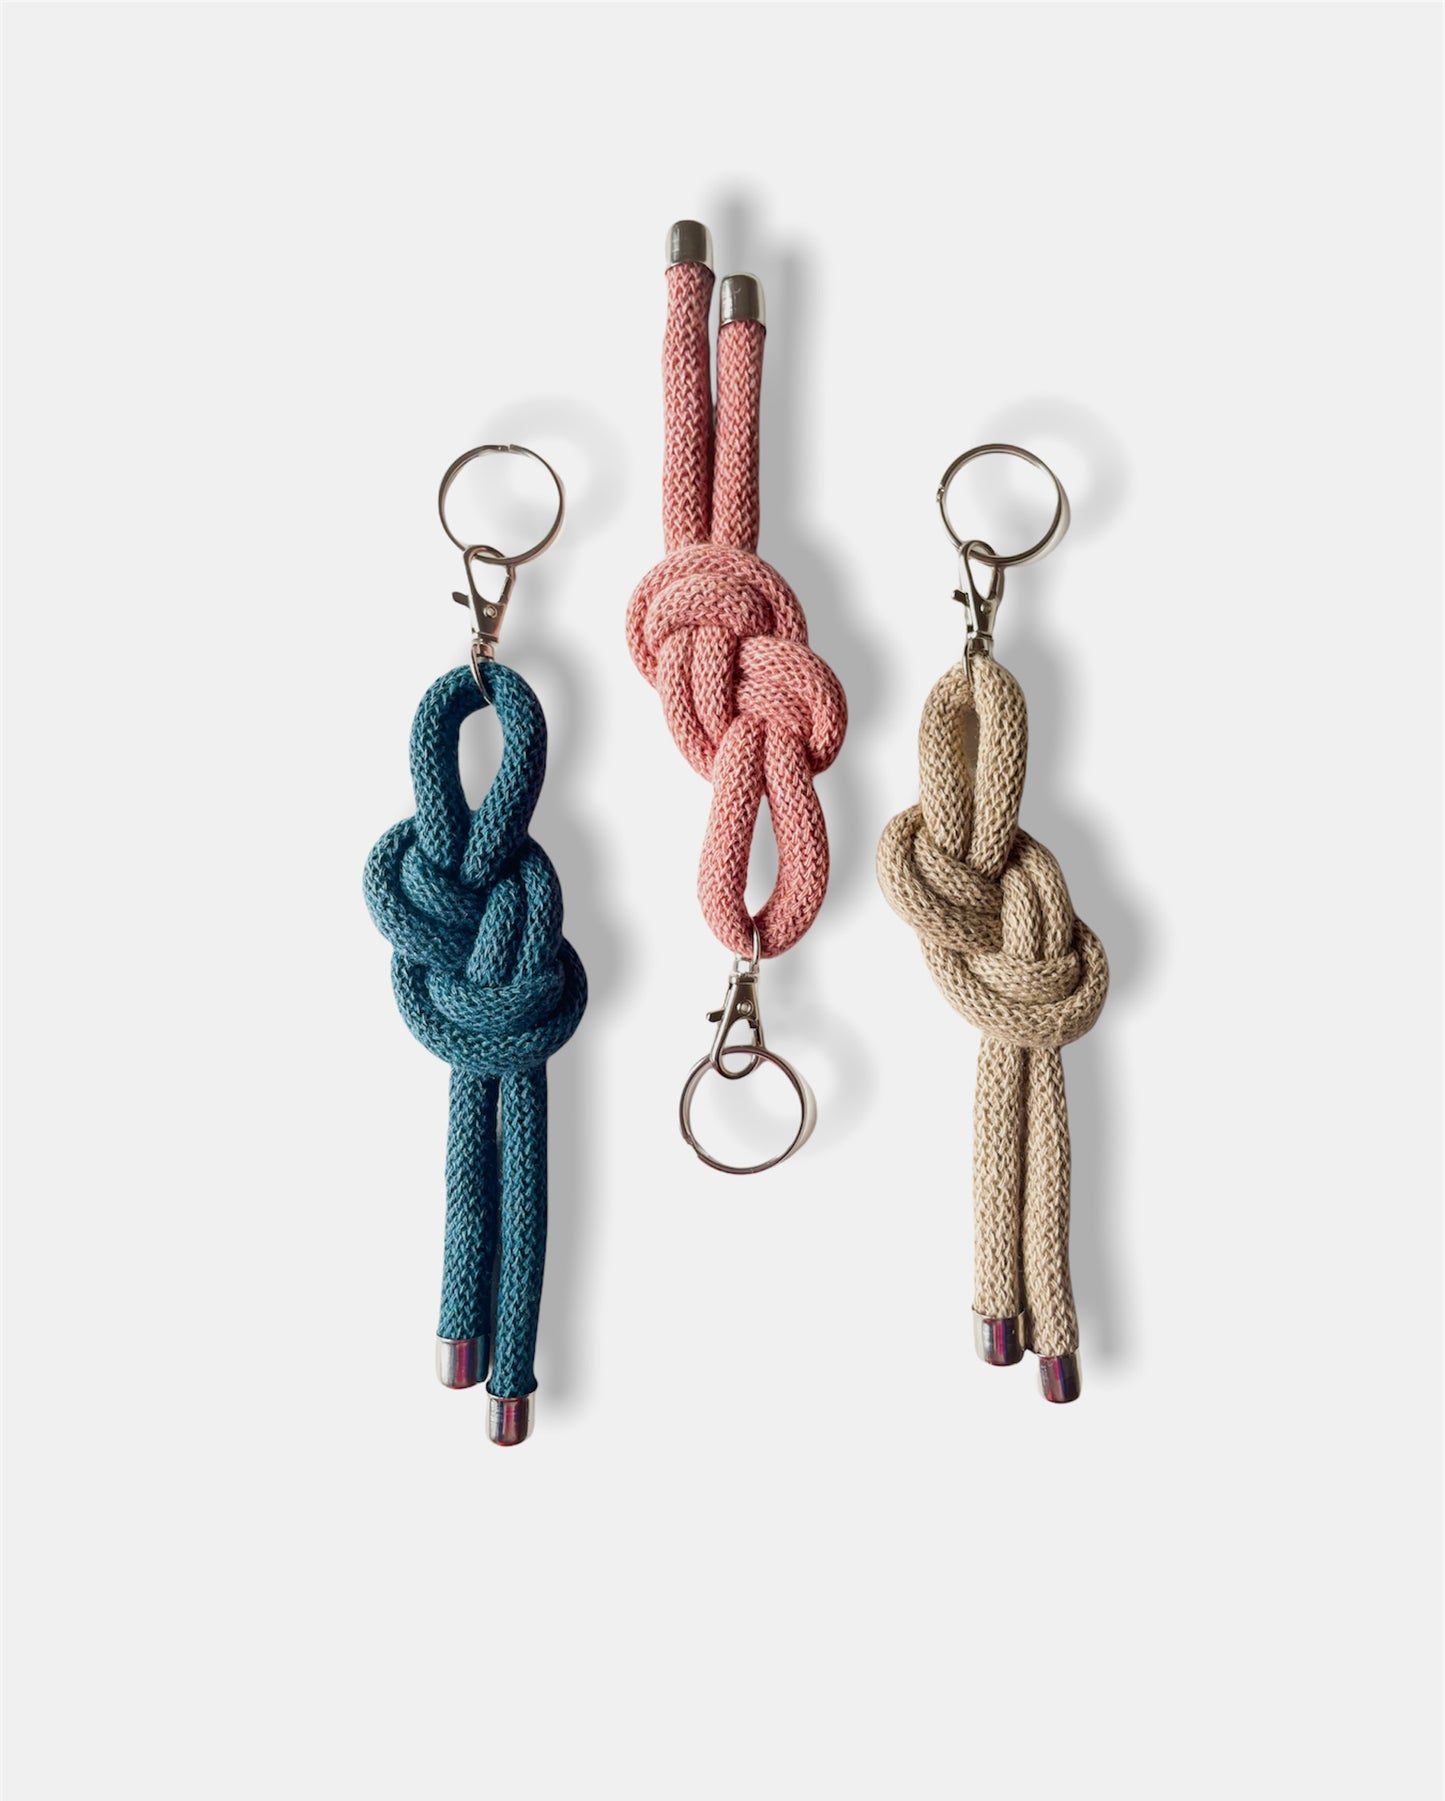 Knotted rope keyrings - knottinger.